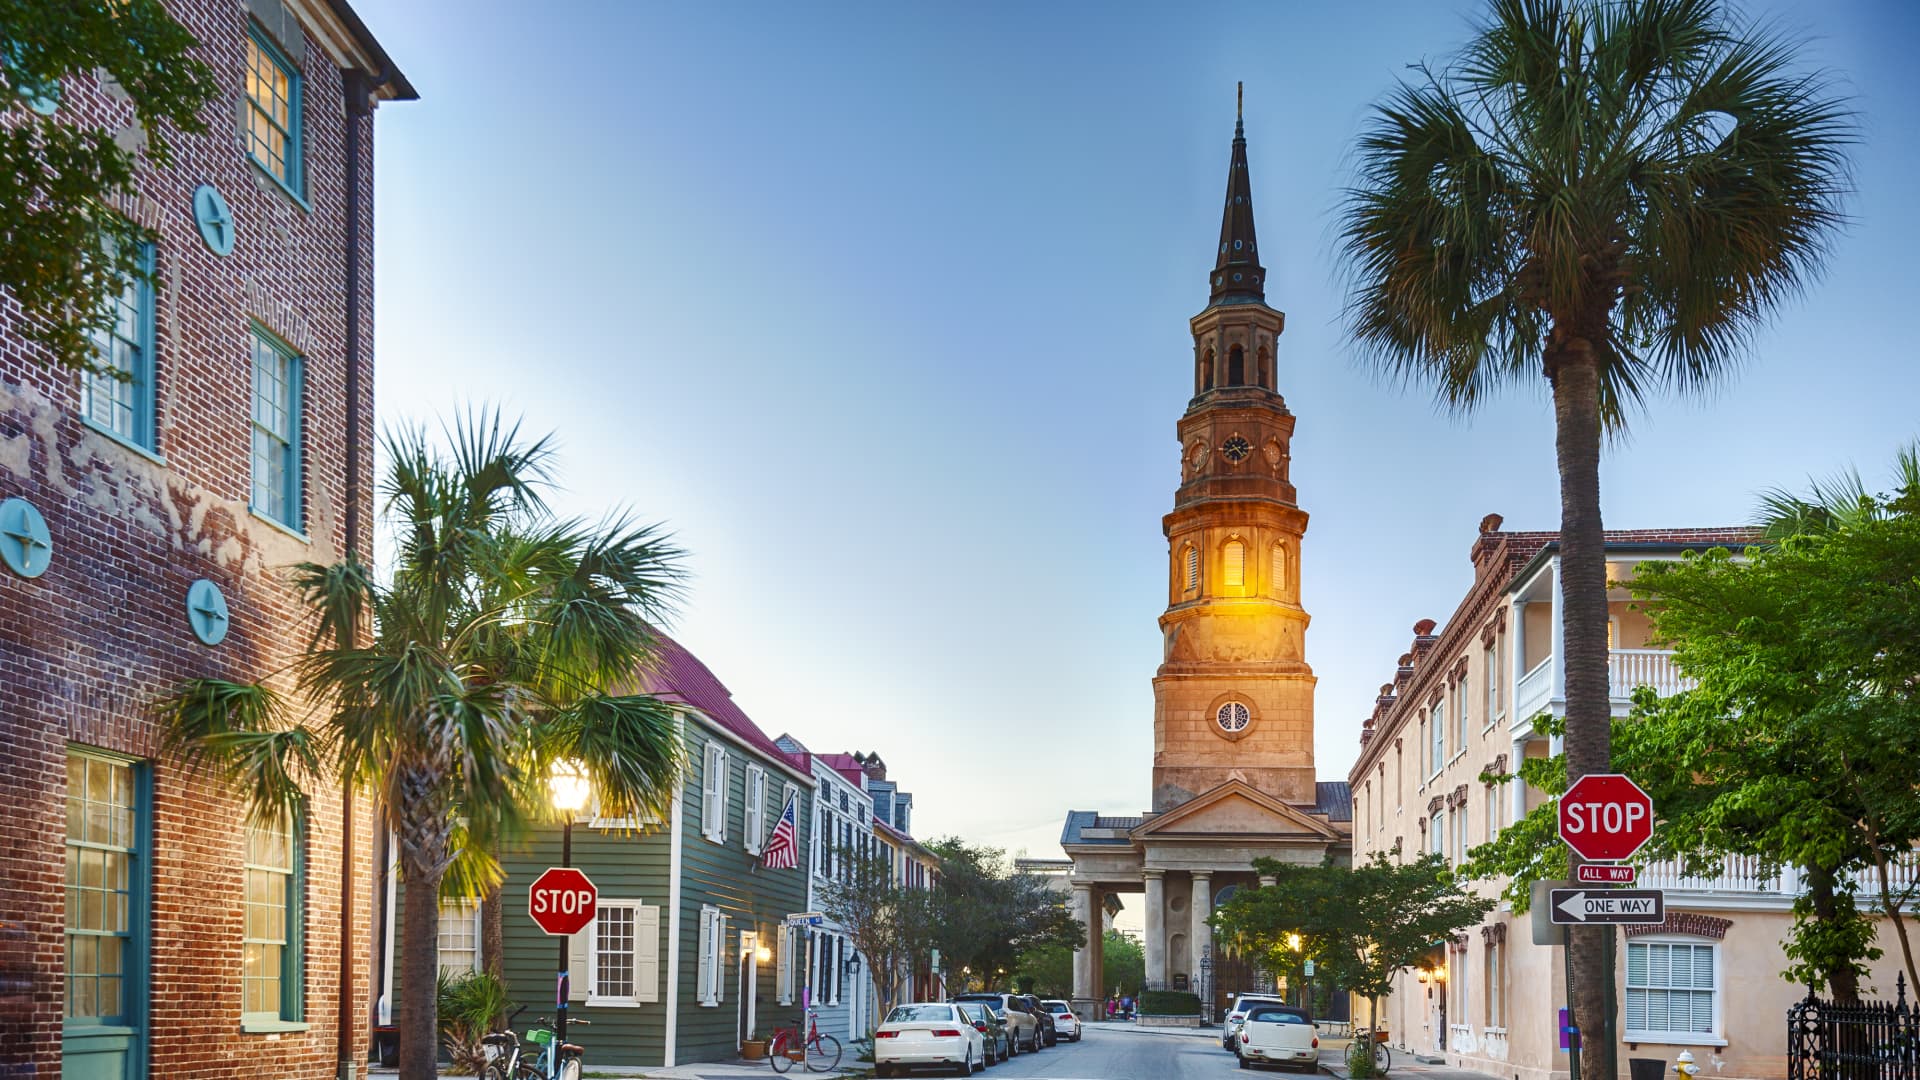 Charleston, South Carolina, was named No. 1 U.S. destination for 2021 by Travel + Leisure magazine.